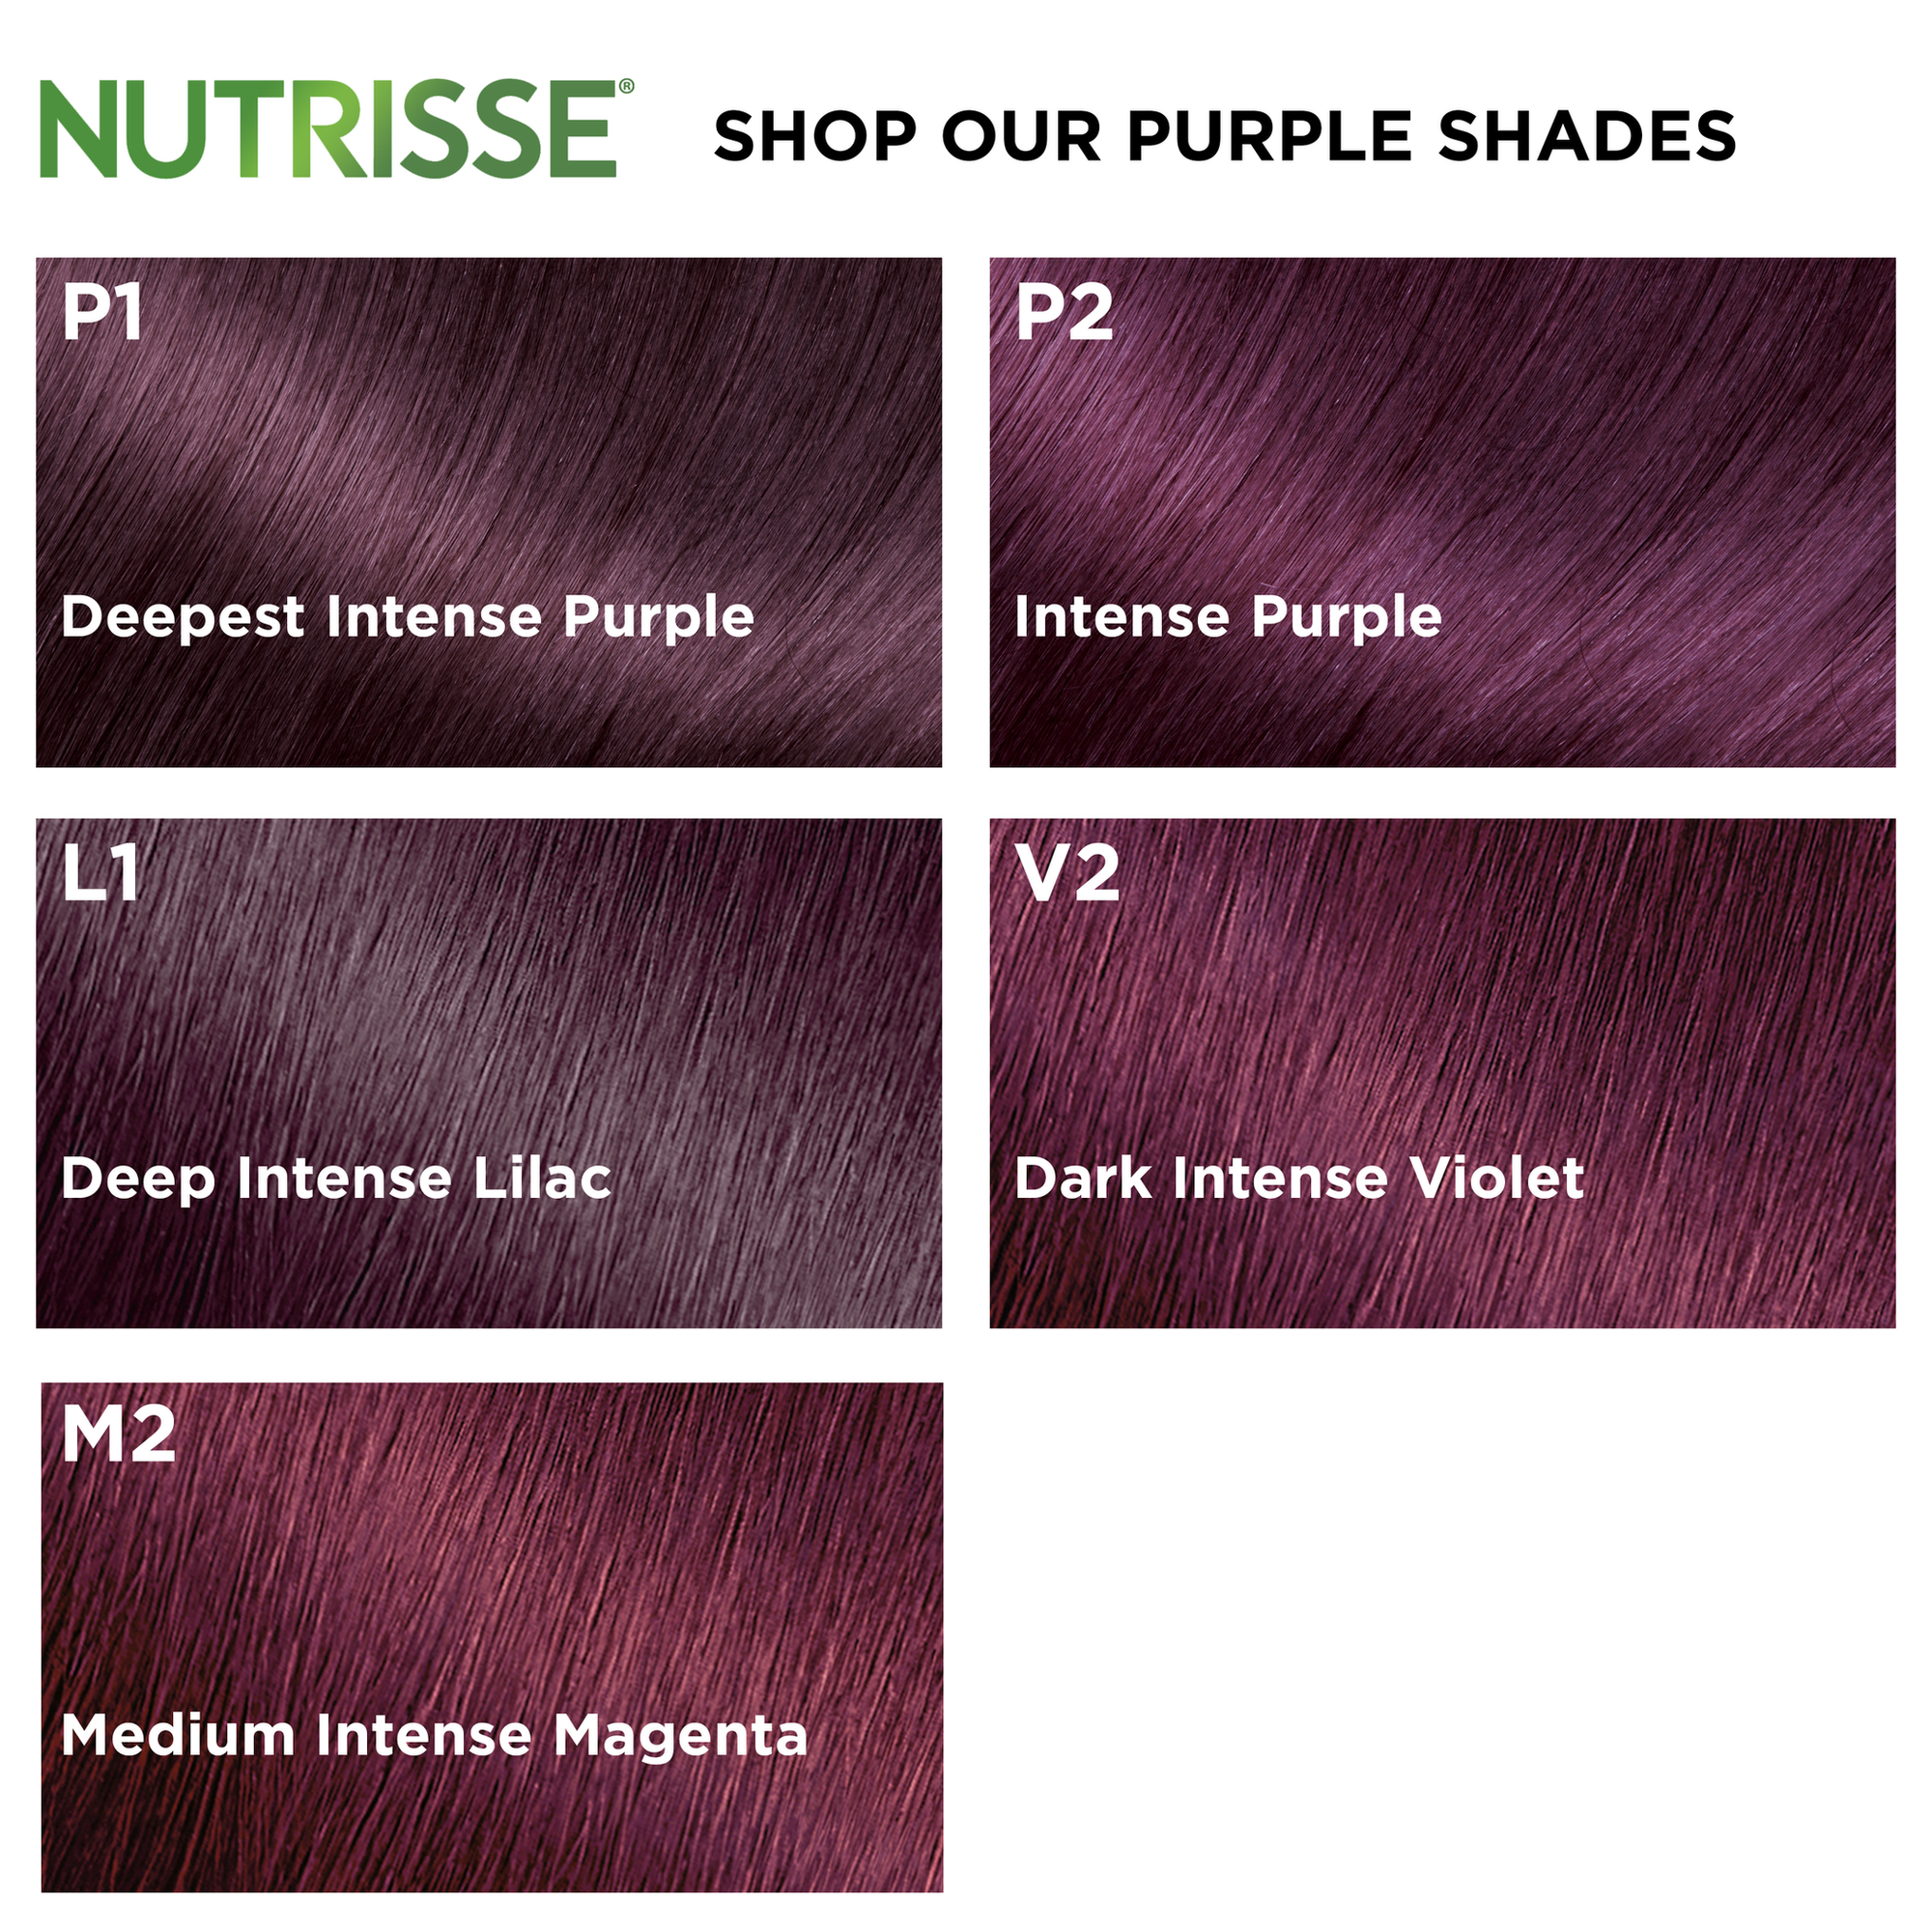 Garnier Nutrisse Nourishing Hair Color Creme, P1 Deepest Intense Purple - image 4 of 6